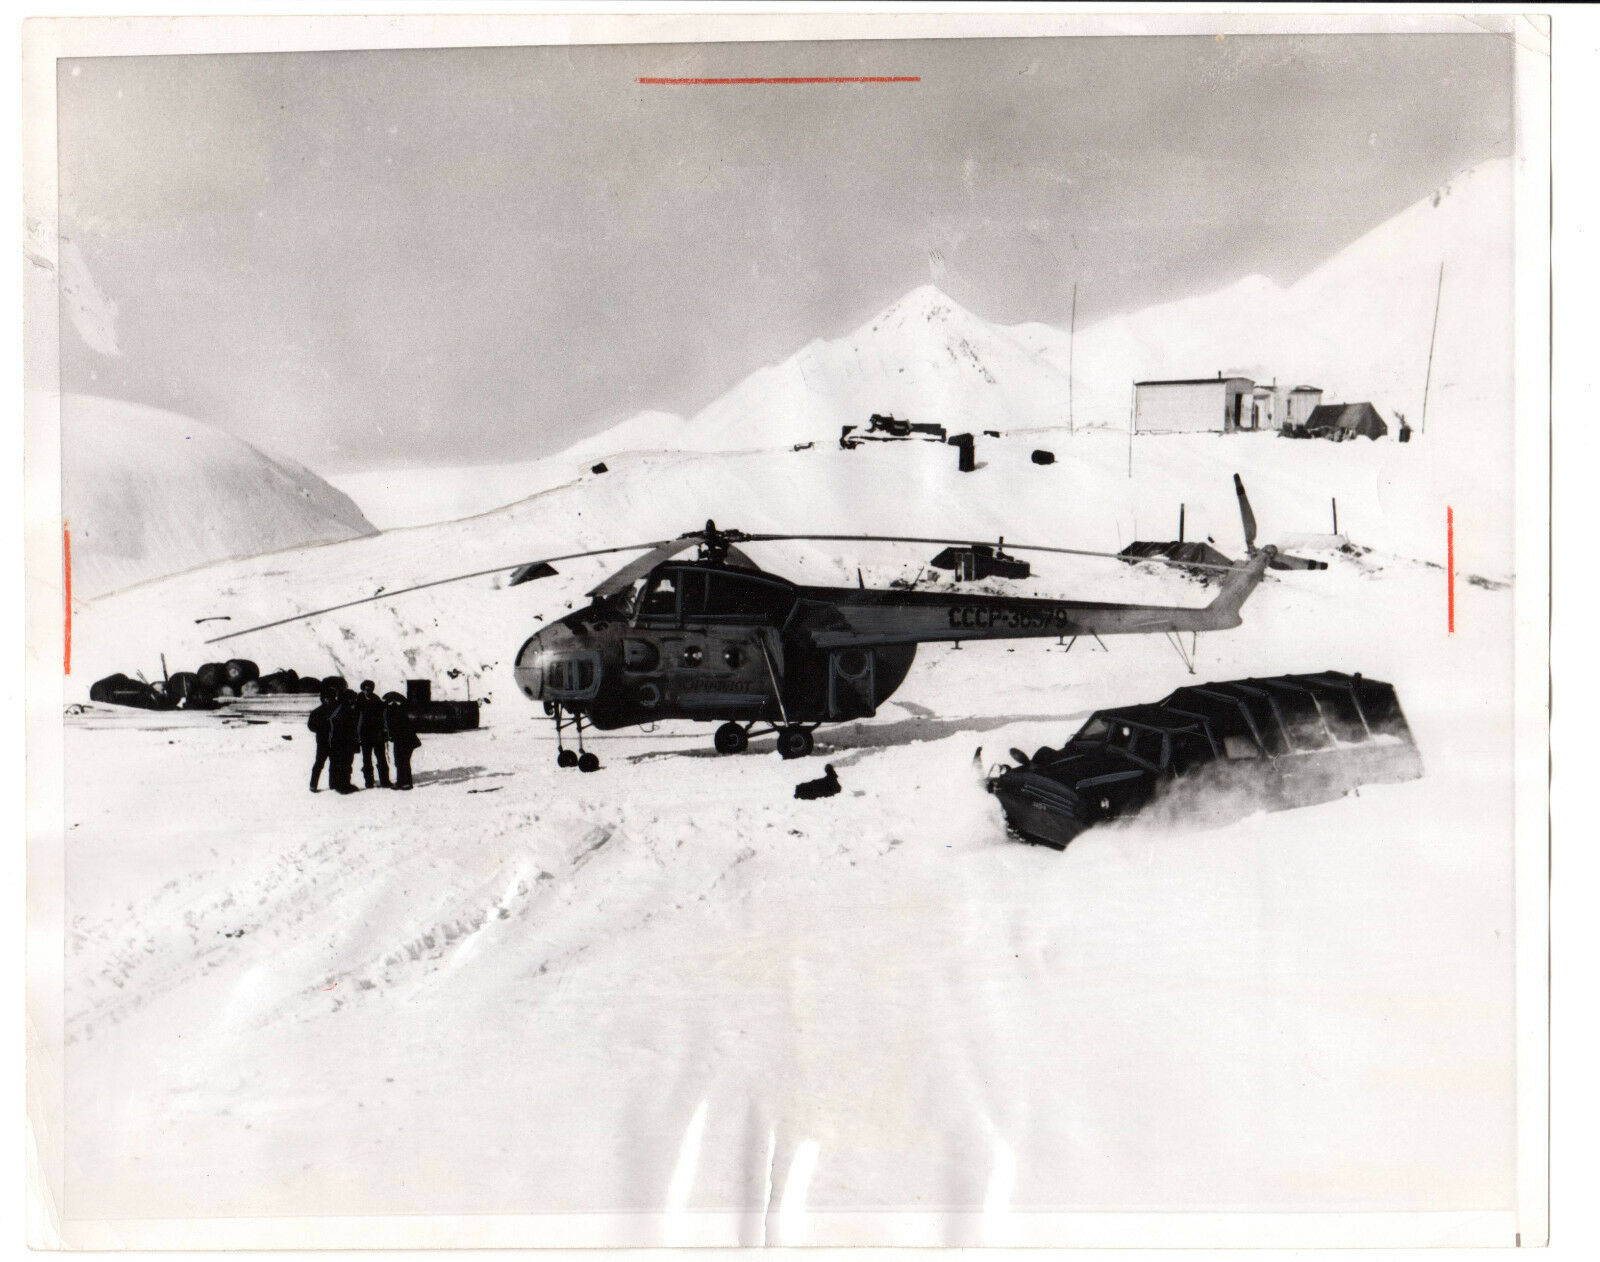 Vintage 1969 Press Photo Soviet Russia Helicopter Chukotka,siberia Gold Mining